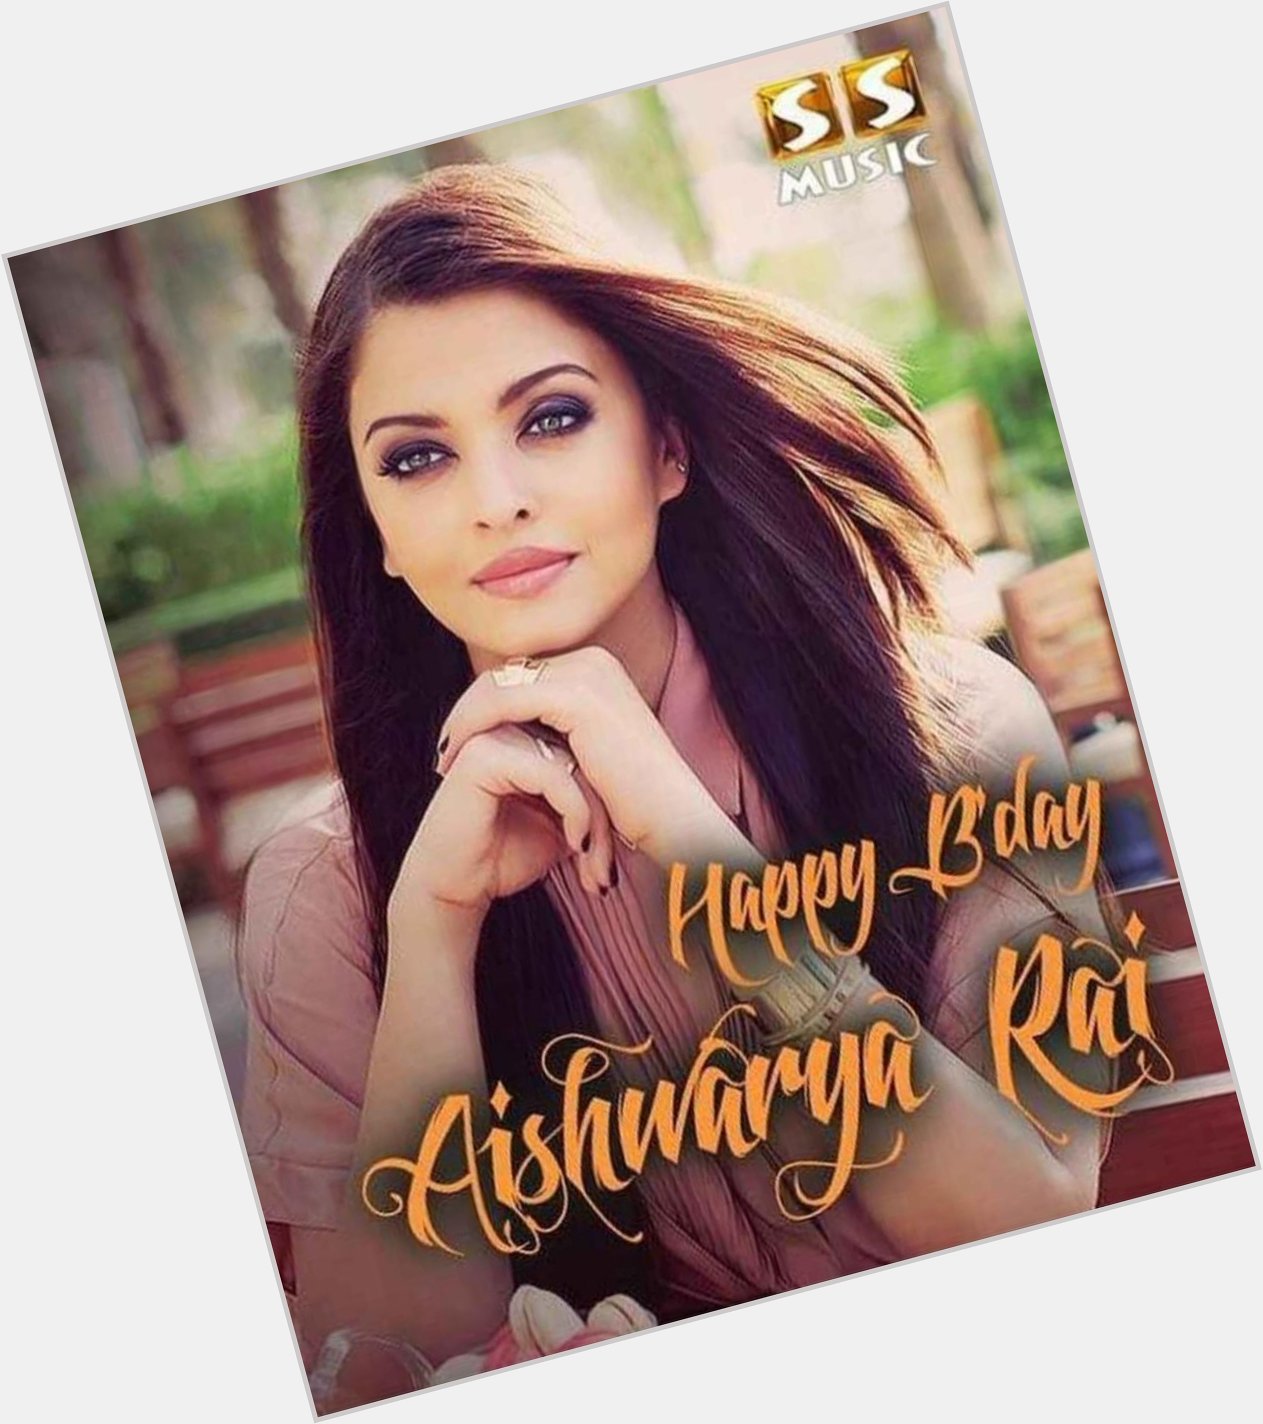 I wish you happy birthday # Aishwarya Rai Bachchan . Blassing to you 